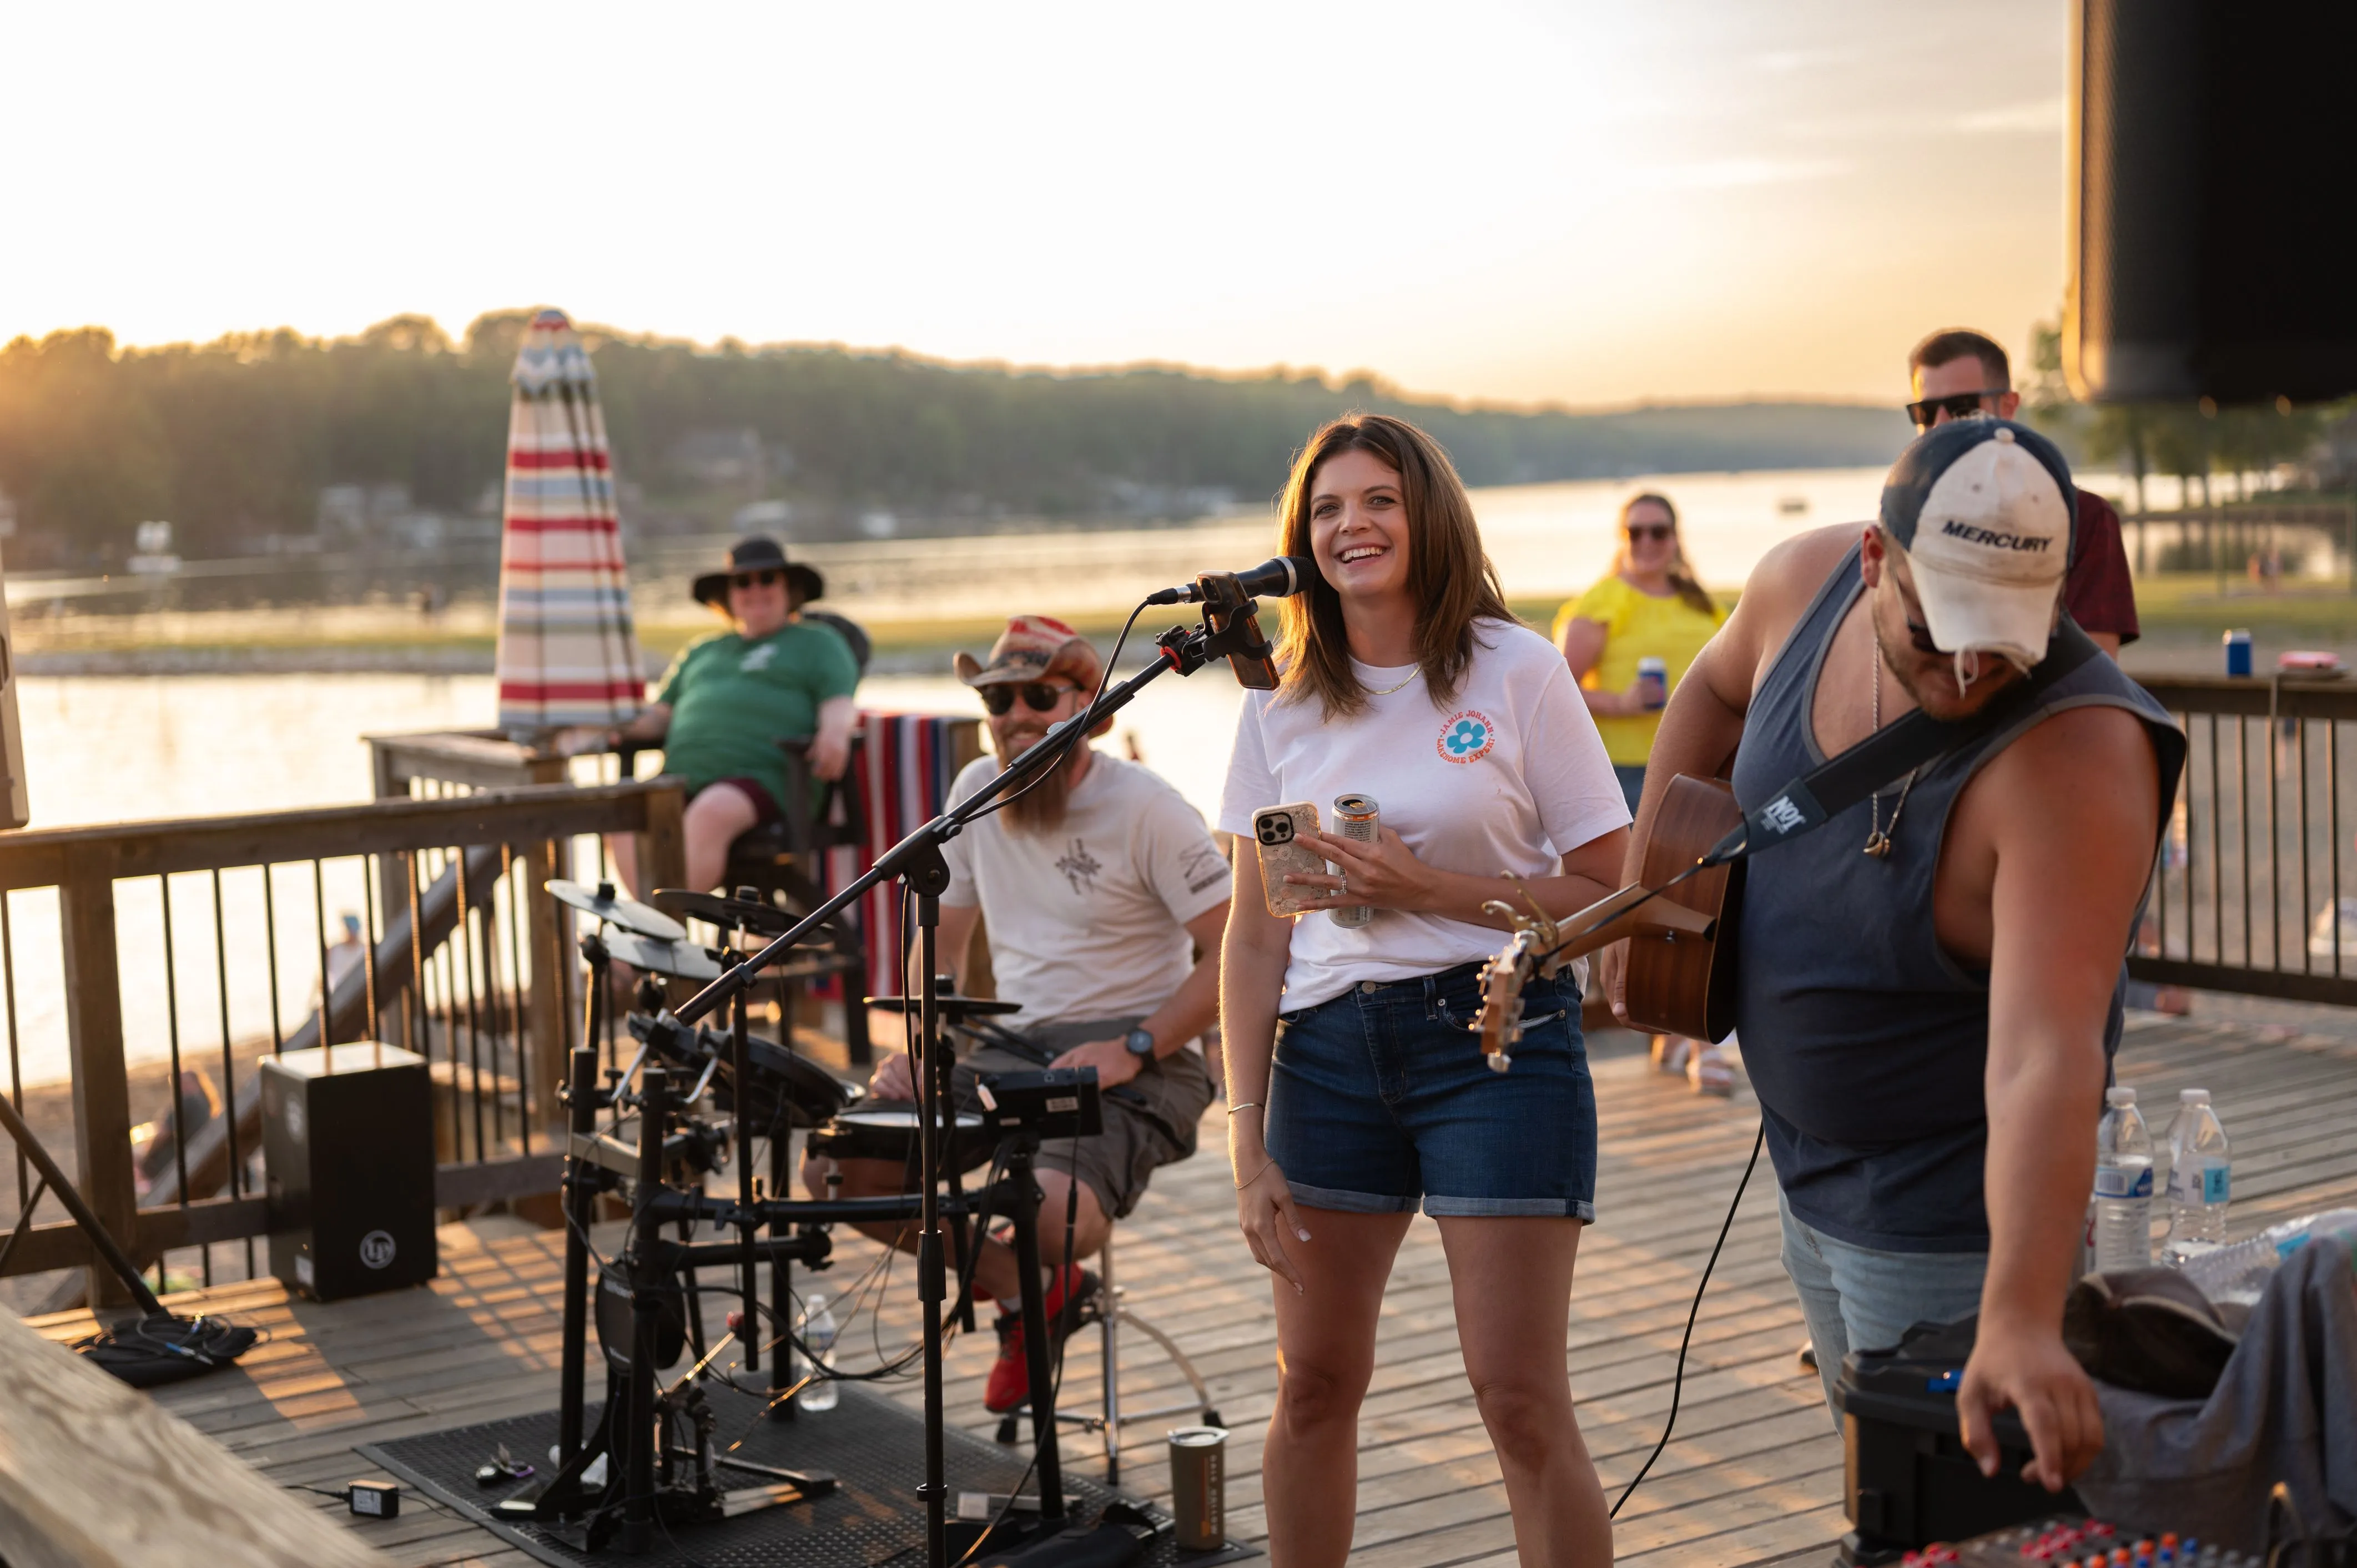 People enjoying a live music performance on a riverside boardwalk at sunset.